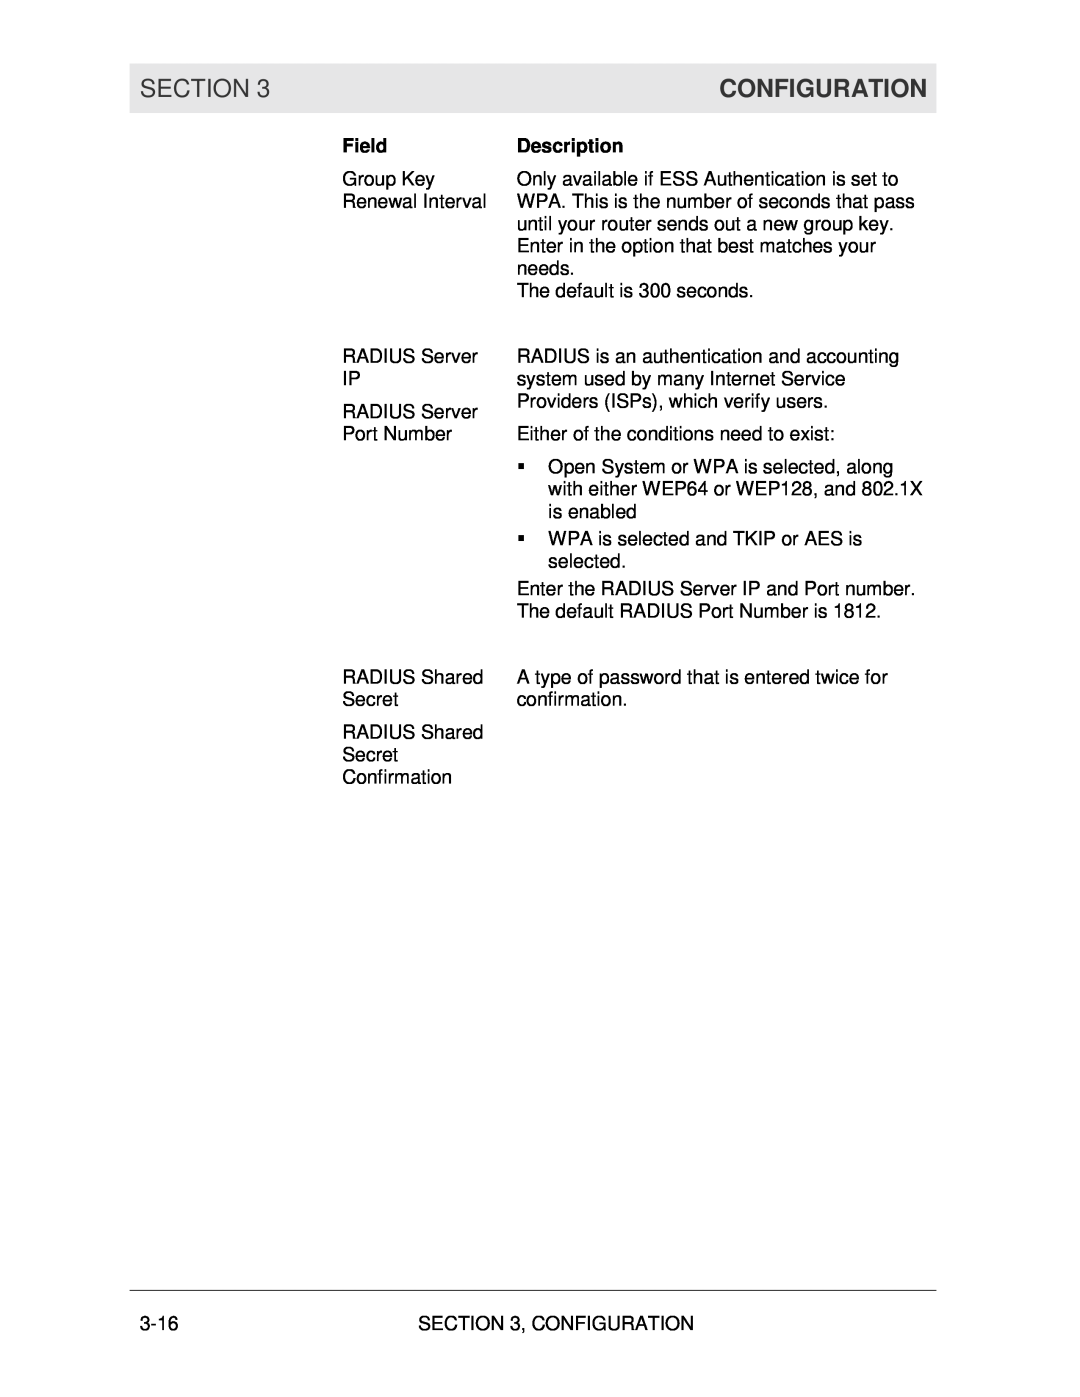 Motorola WR850G manual Section, Configuration, Field, Description 